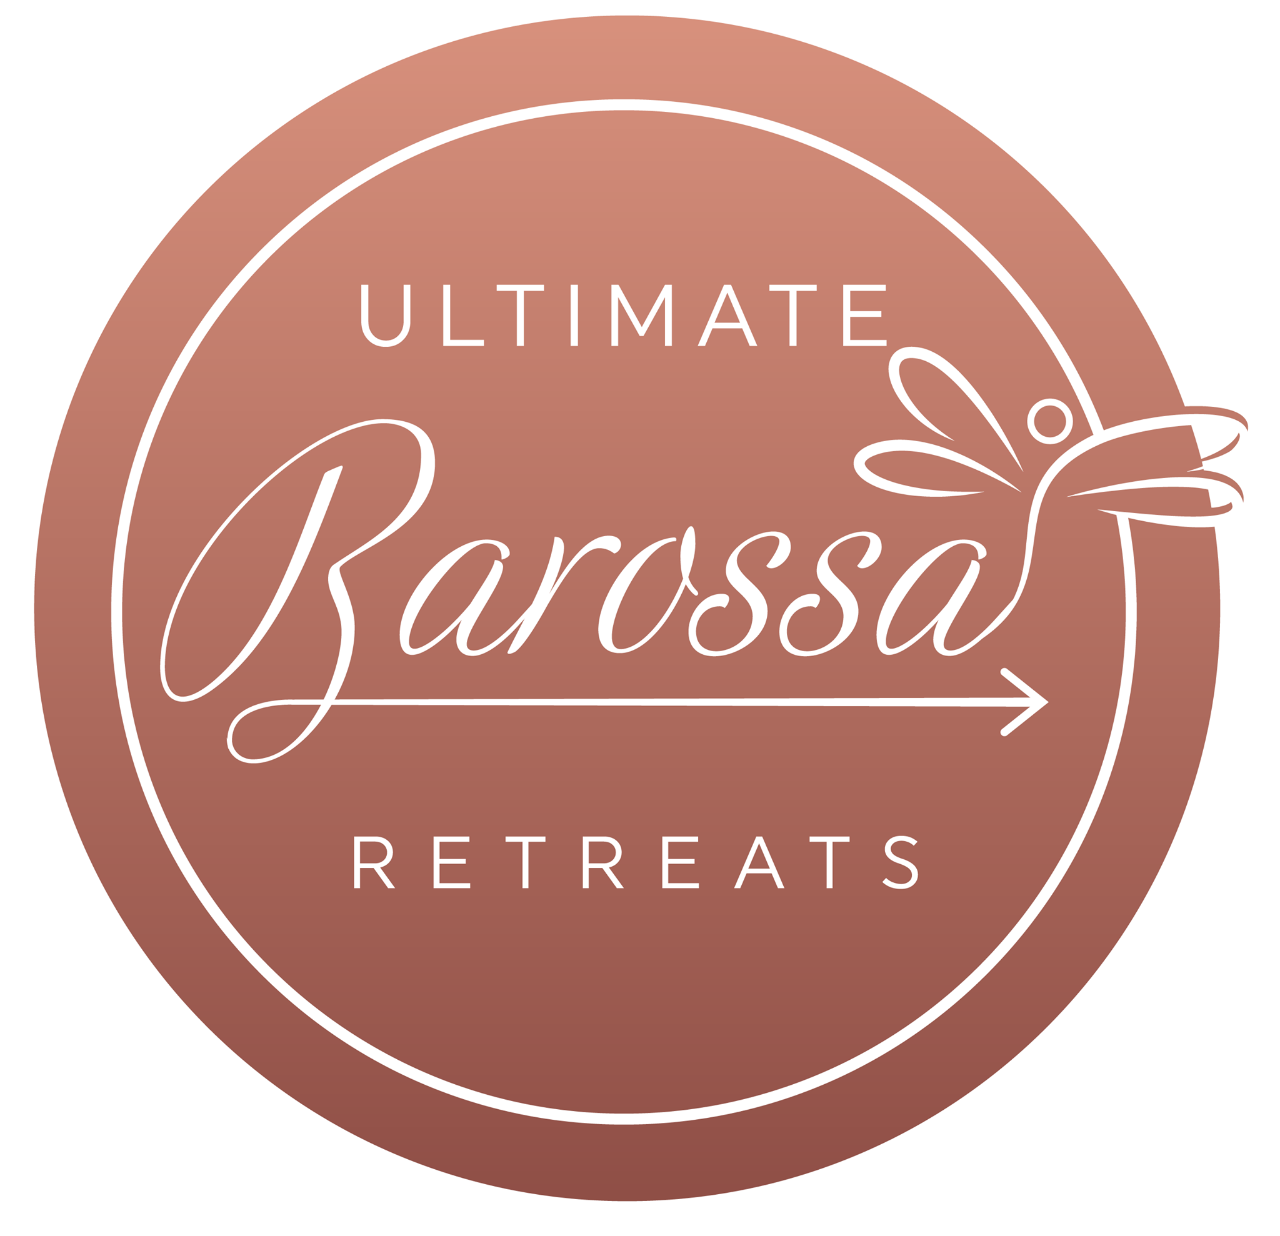 Ultimate Barossa Retreats July 2021